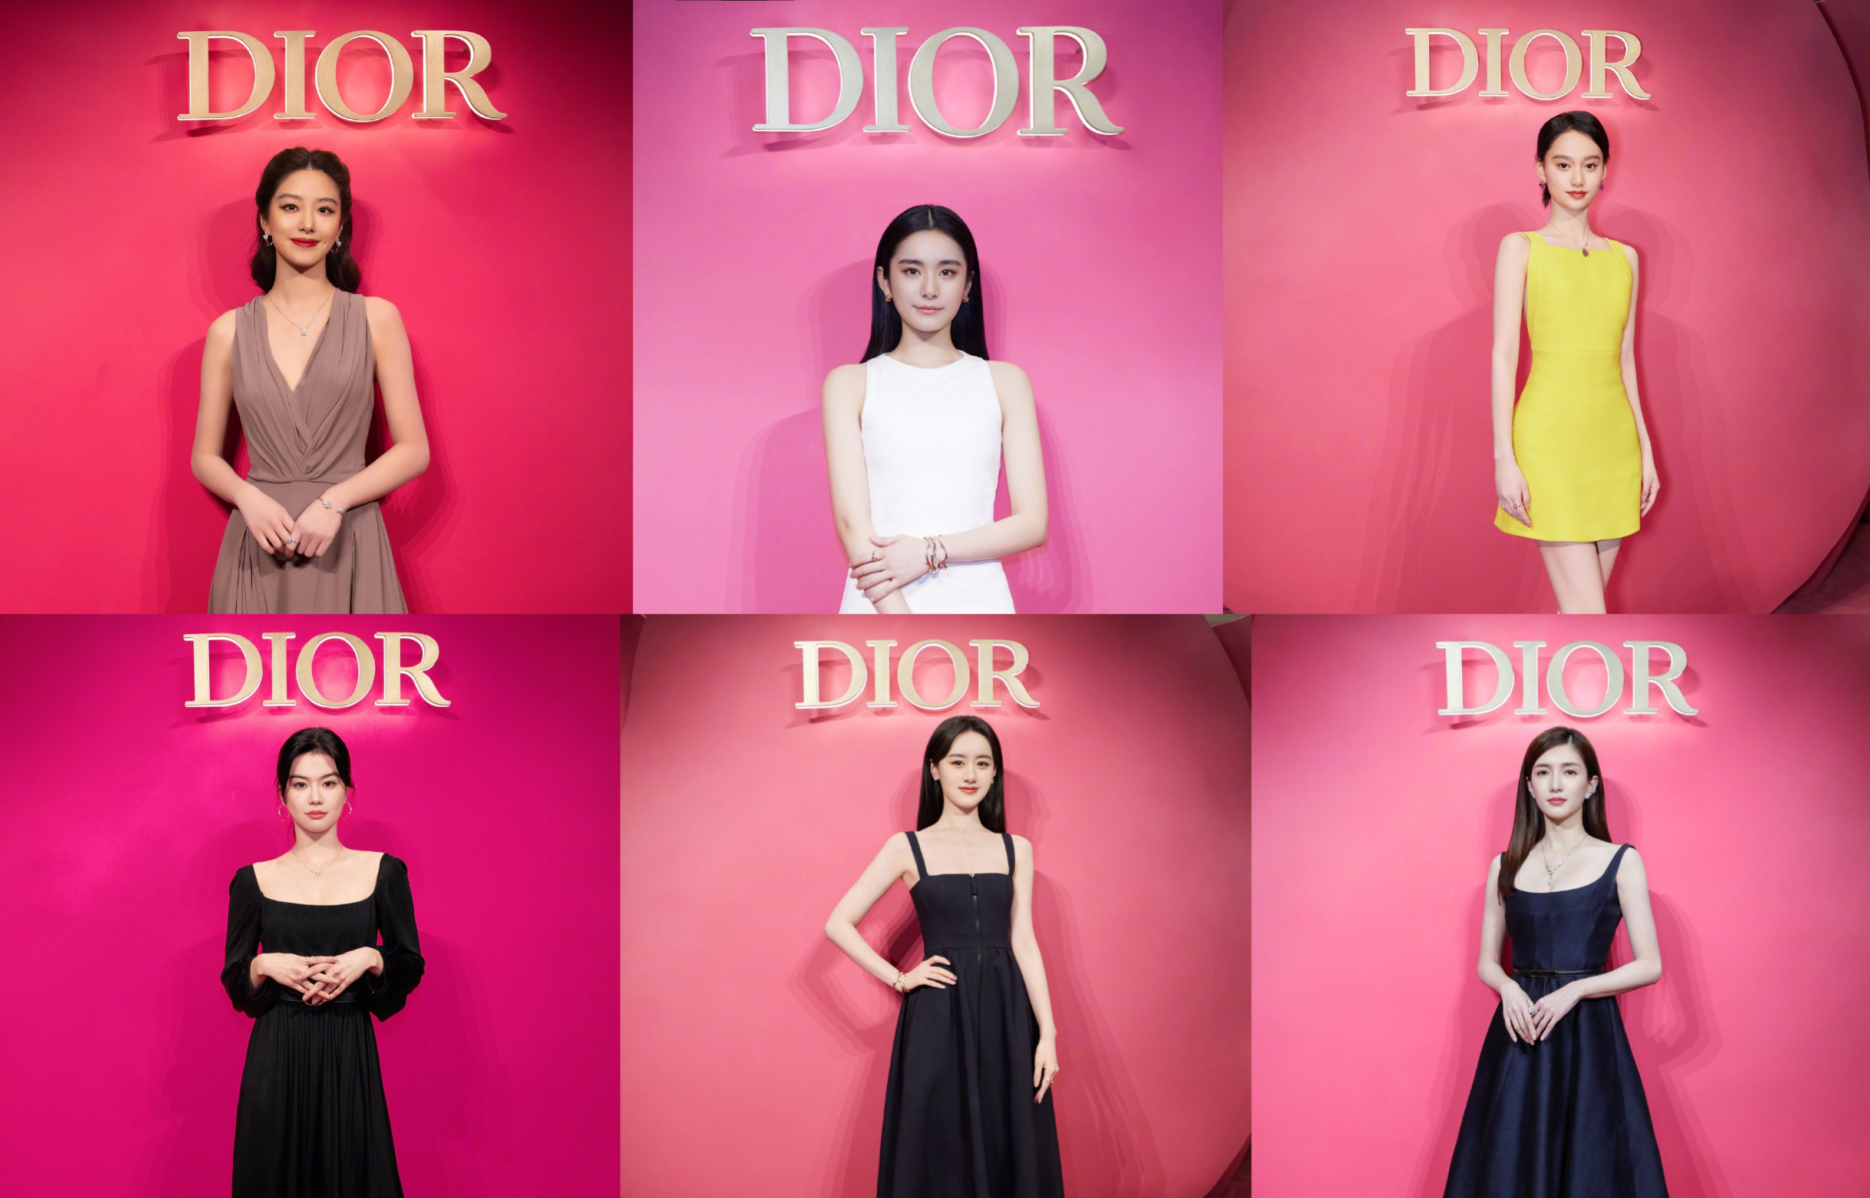 Credit: Dior/Weibo